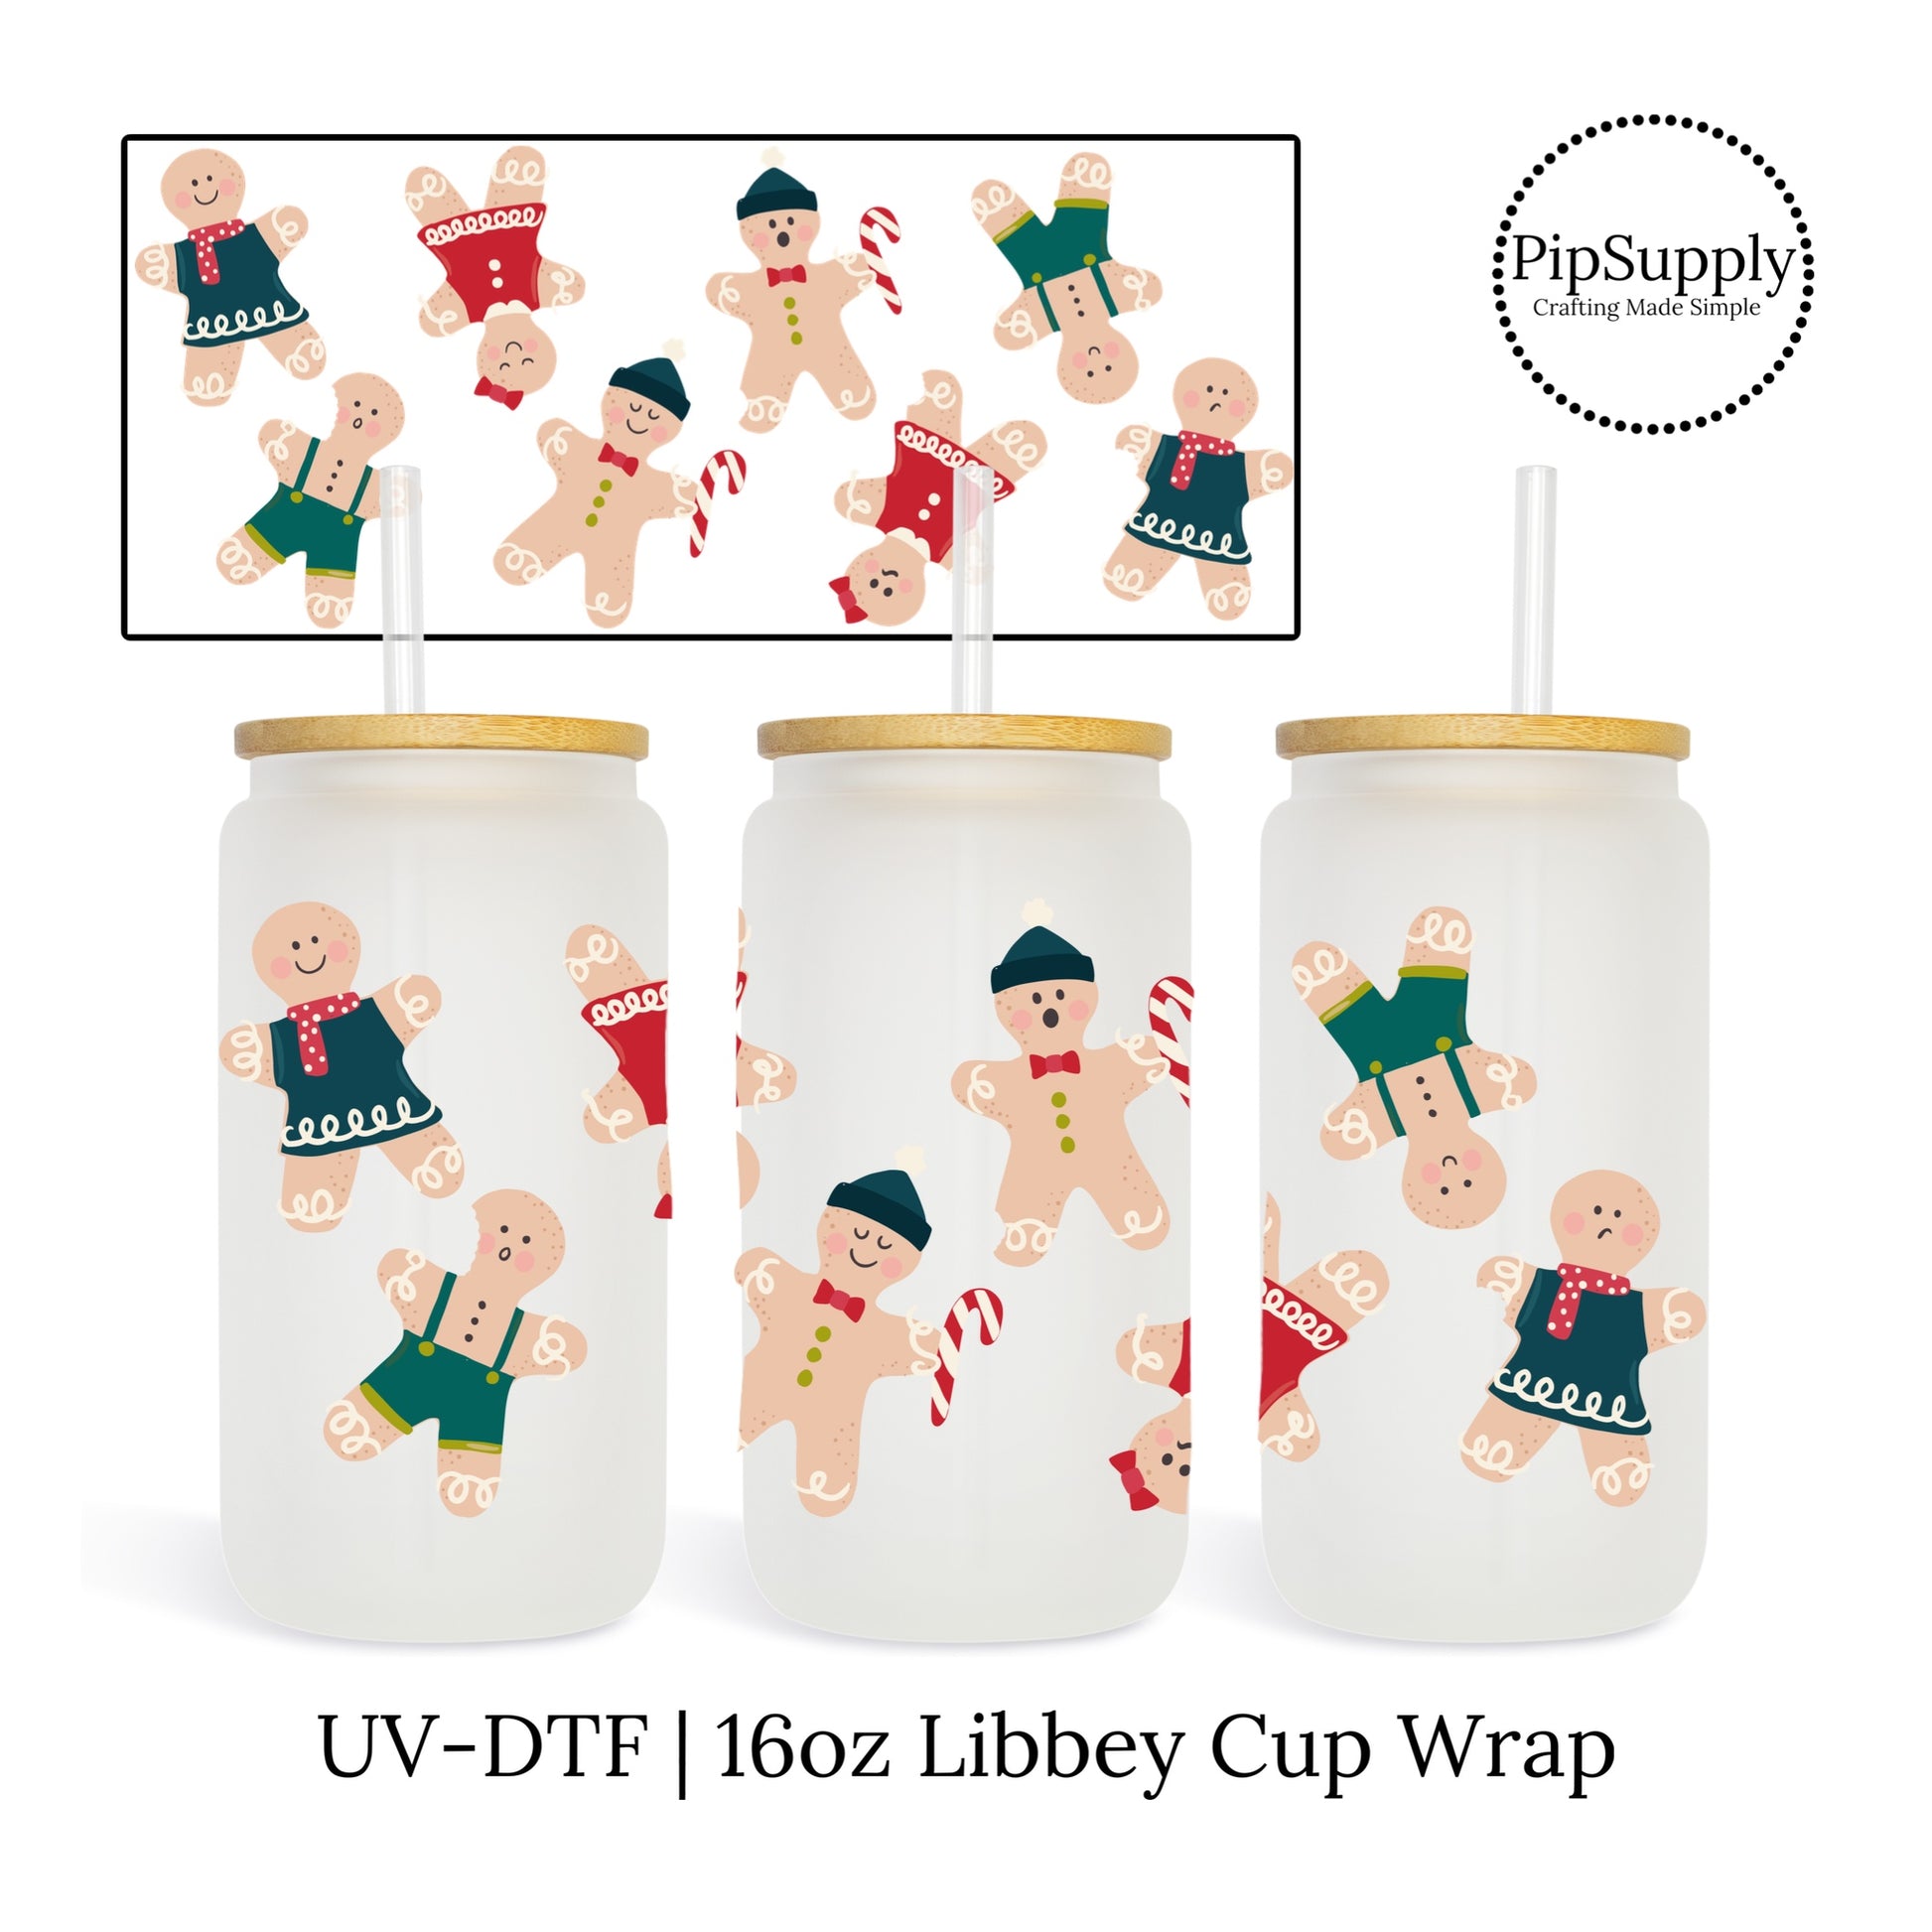 Wednesday - 16 oz Libbey Cup Wrap